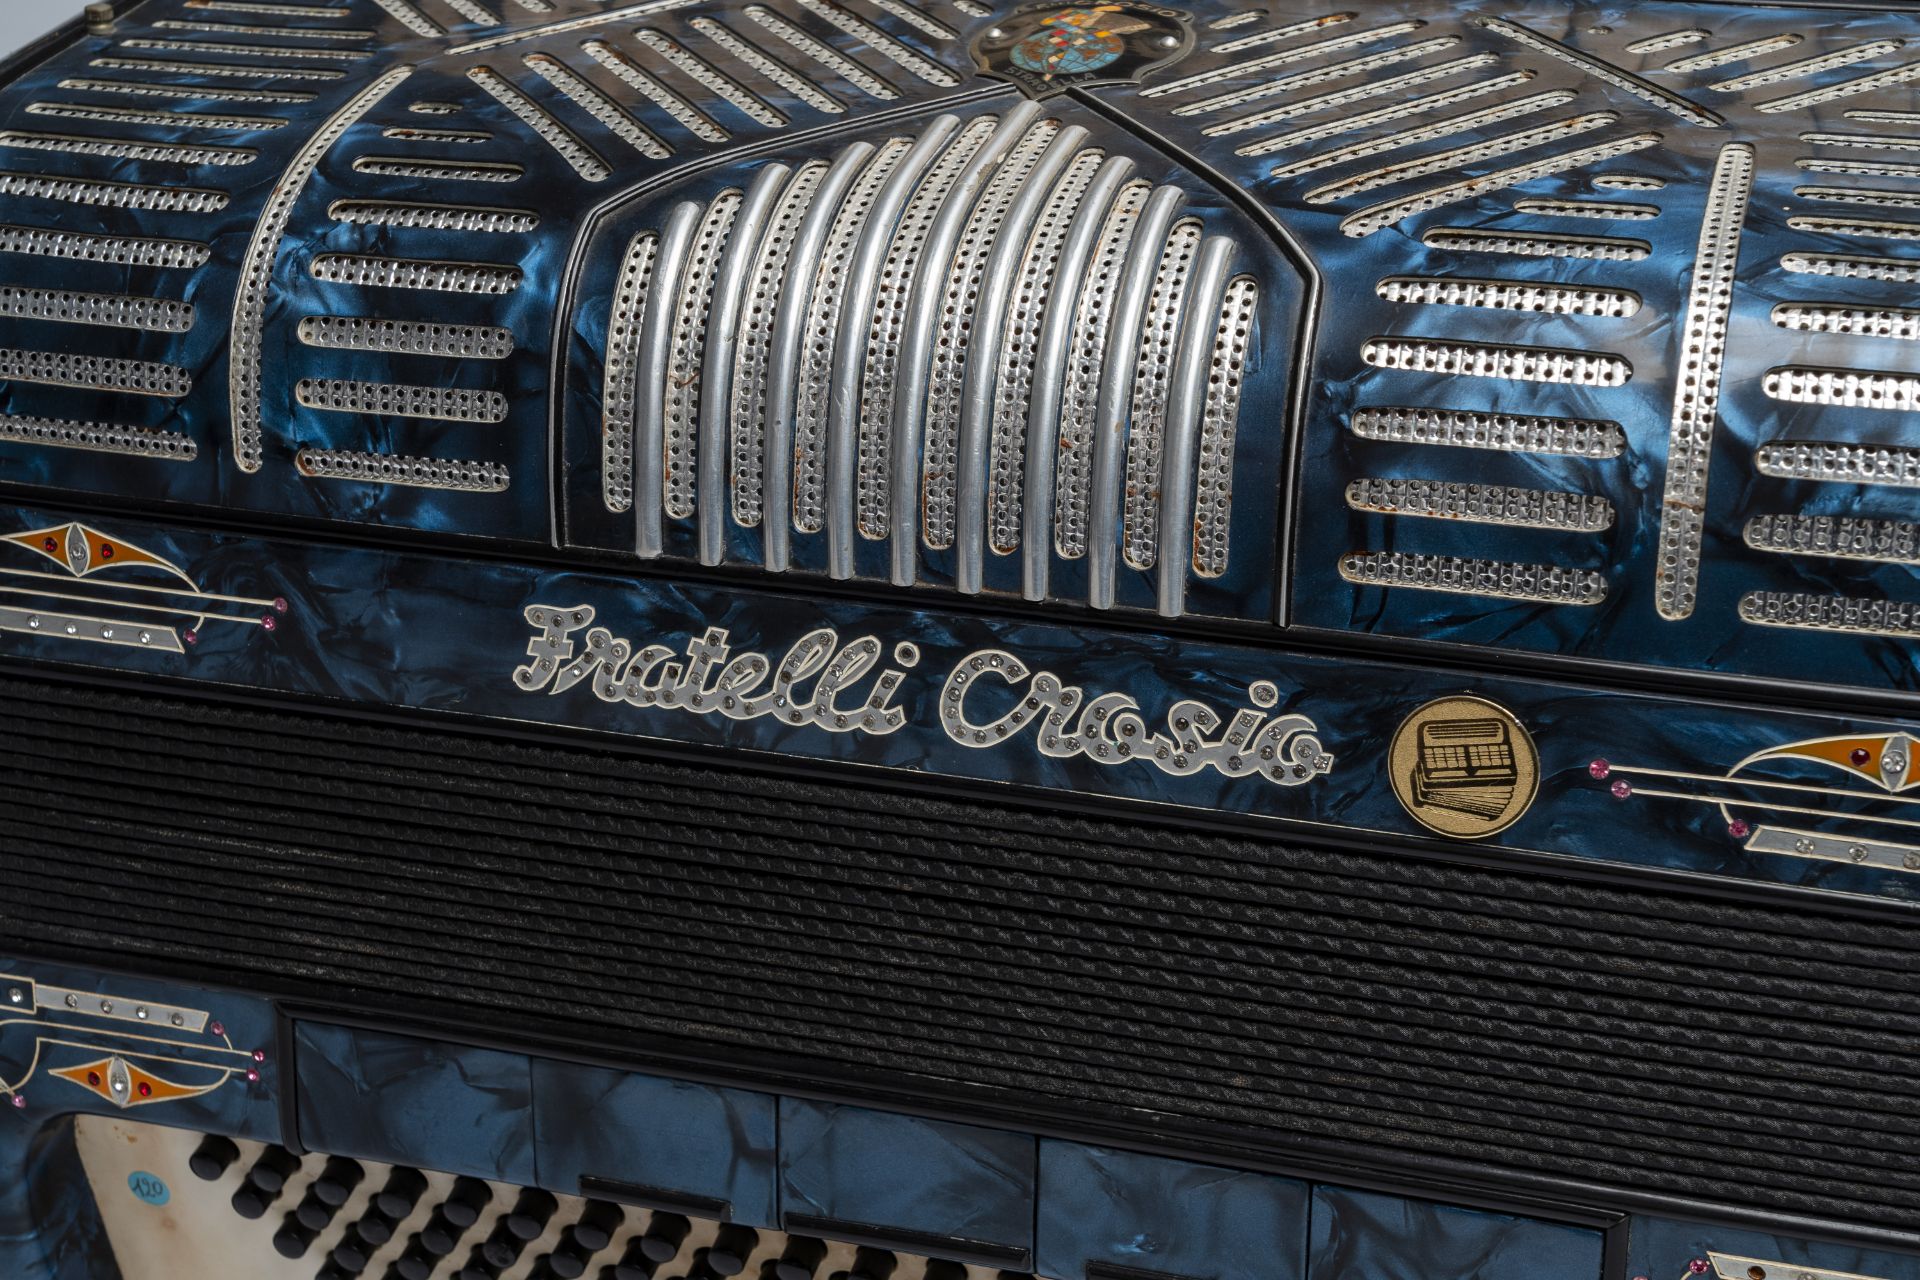 An Italian 'Fratelli Crosio' chromatic accordion with piano keyboard, ca. 1960/70 - Image 4 of 4